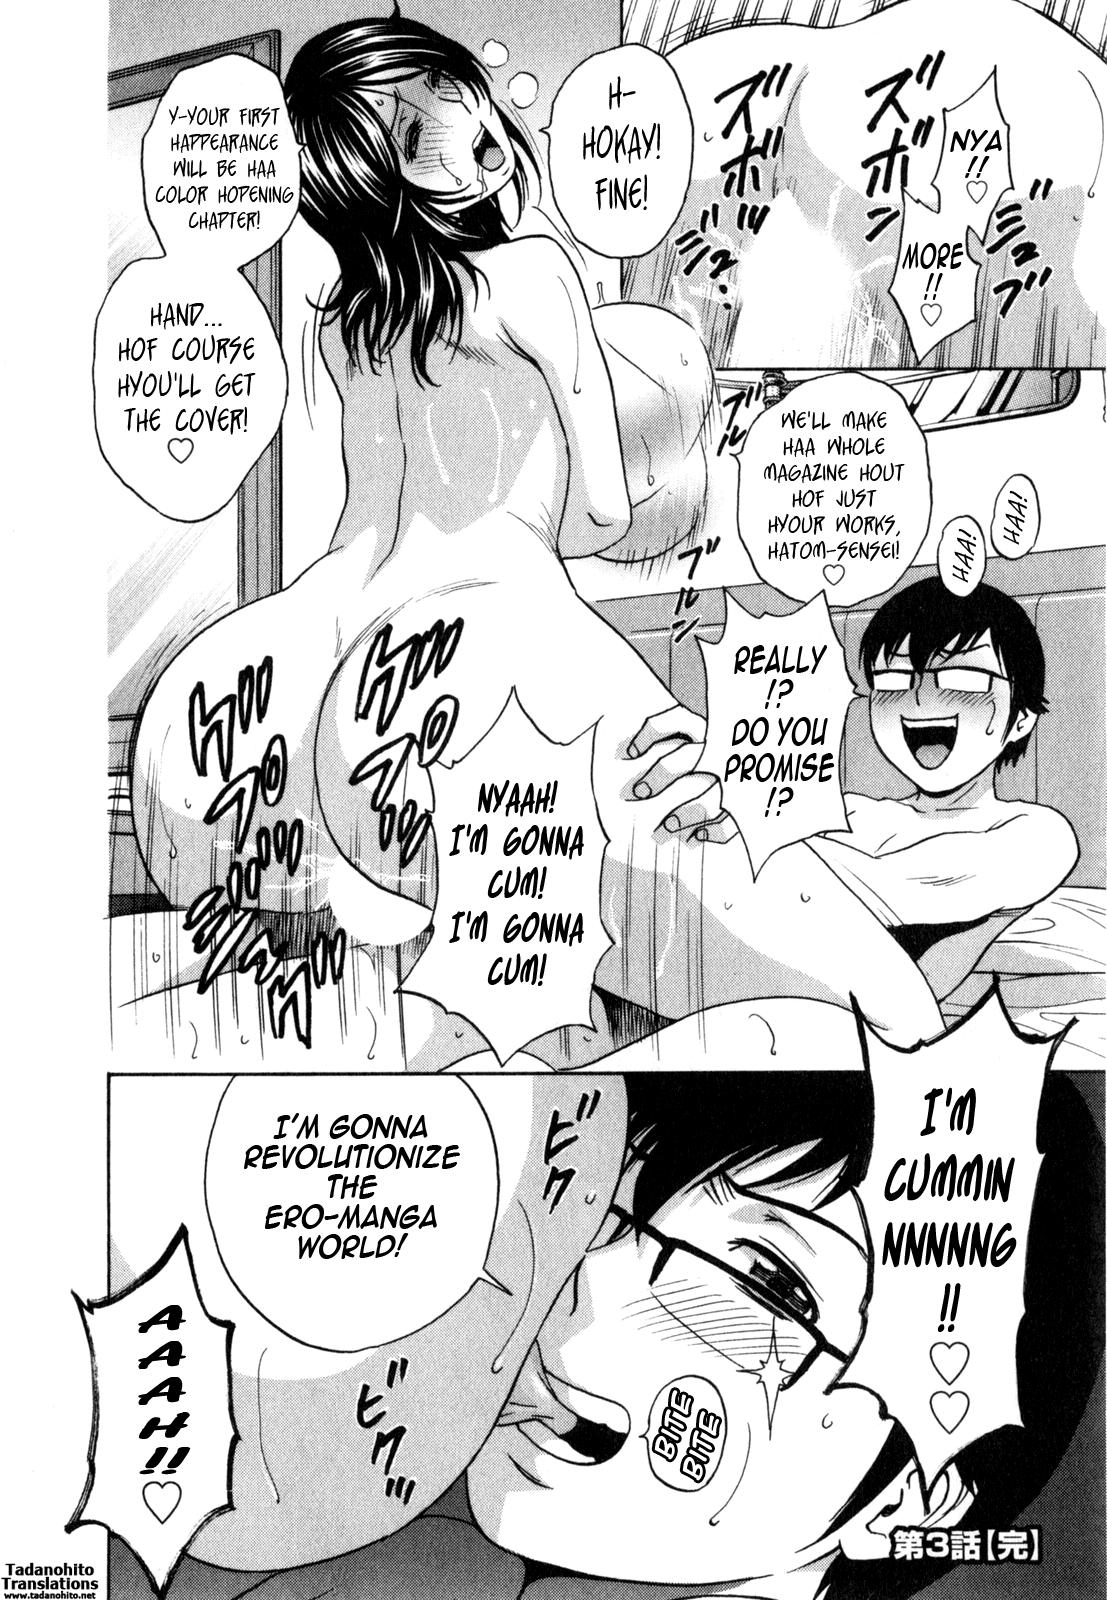 [Hidemaru] Life with Married Women Just Like a Manga 3 - Ch. 1-6 [English] {Tadanohito} 63